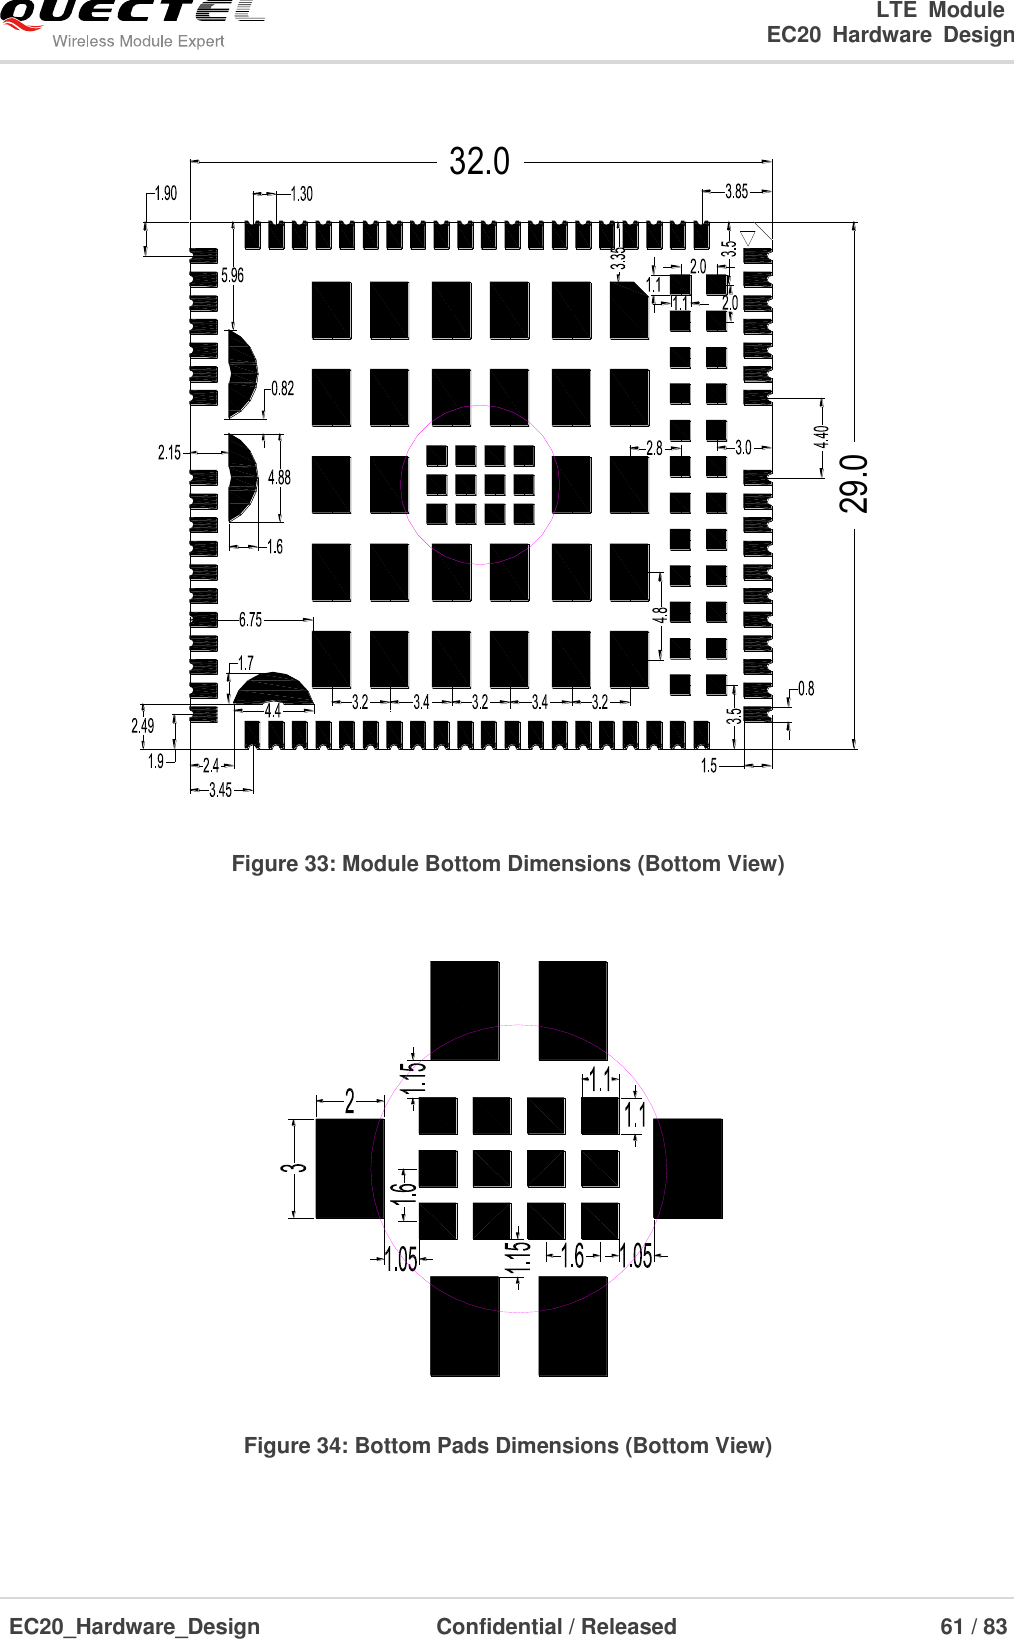                                                                        LTE  Module                                                                   EC20  Hardware  Design  EC20_Hardware_Design                  Confidential / Released                            61 / 83     29.032.0 Figure 33: Module Bottom Dimensions (Bottom View)  Figure 34: Bottom Pads Dimensions (Bottom View)  